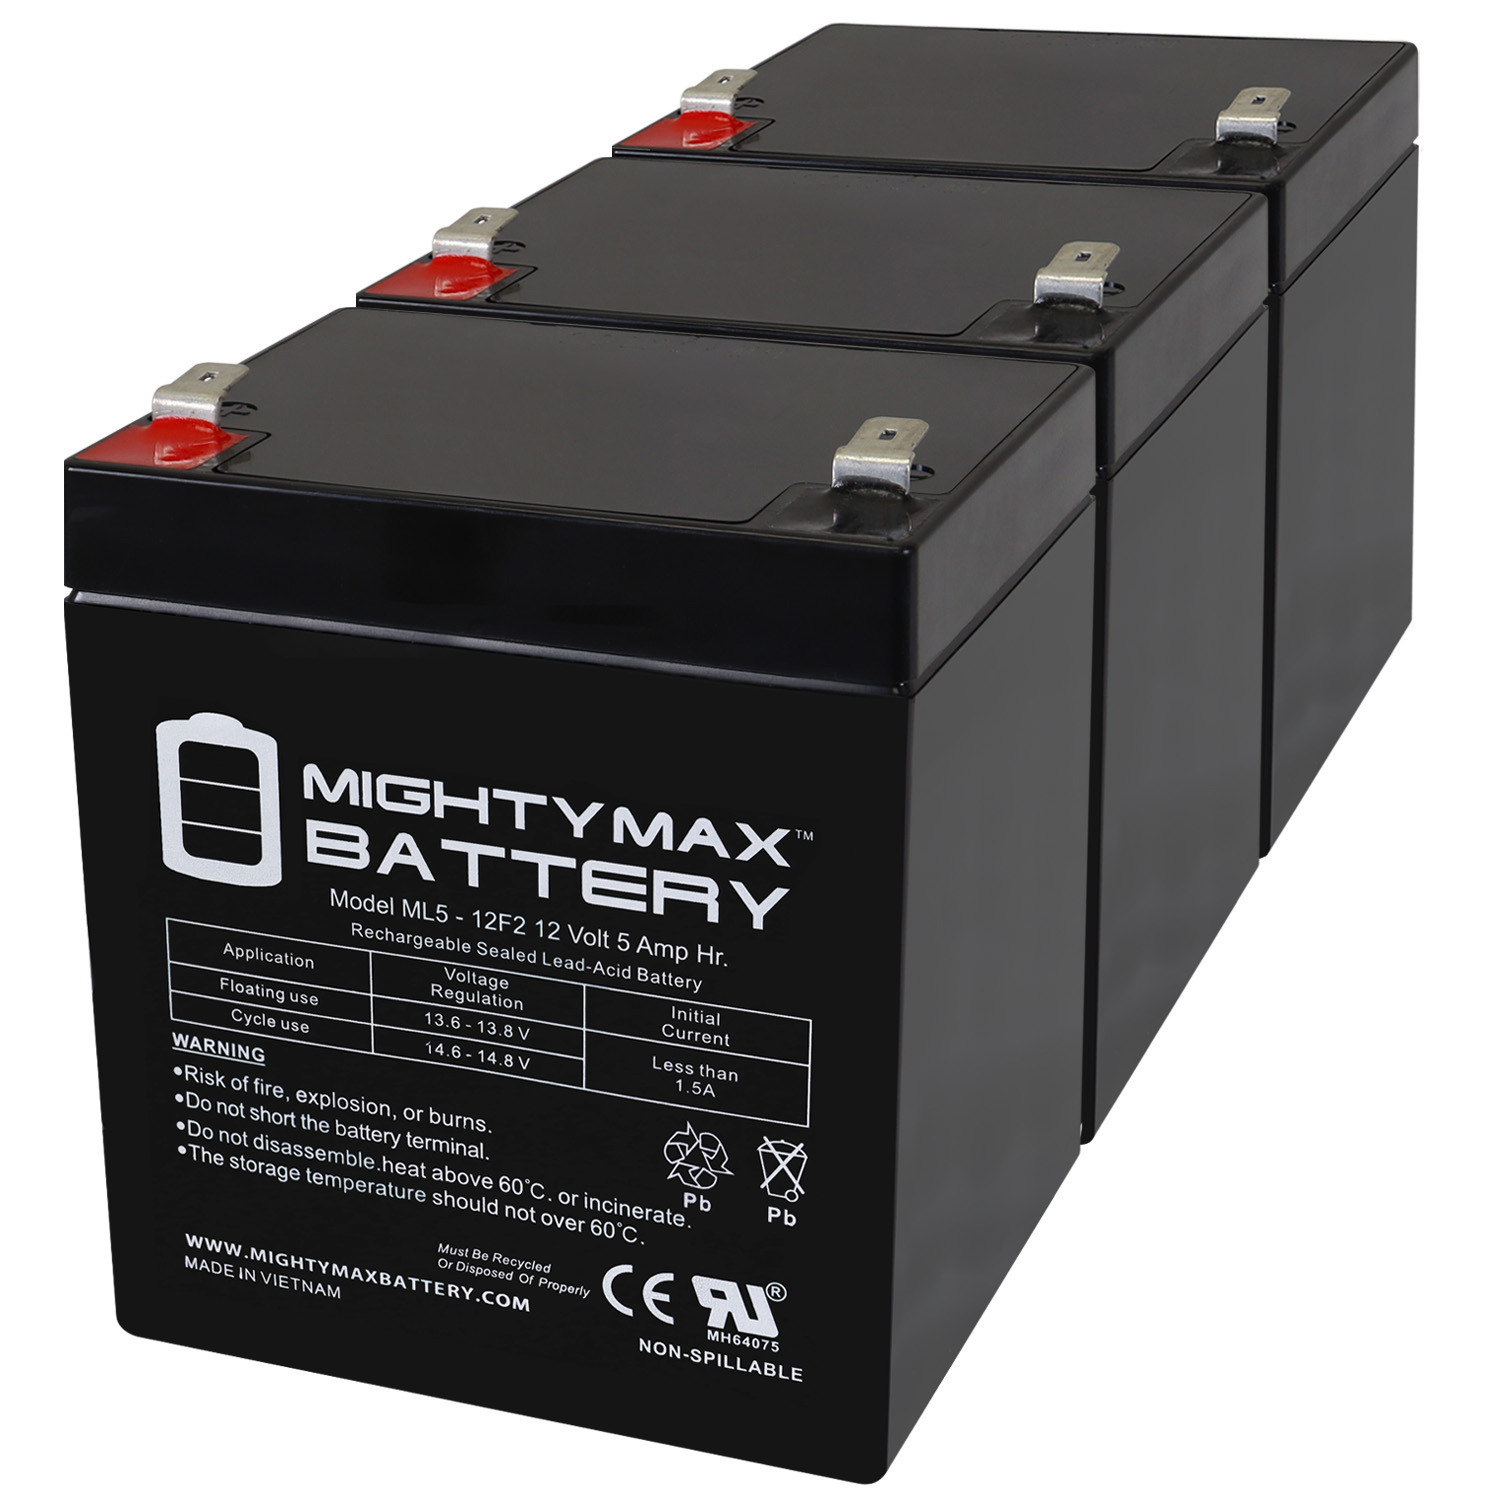 12V 5Ah F2 SLA Replacement Battery for Dorcy Spotlight 41-1067 - 3 Pack